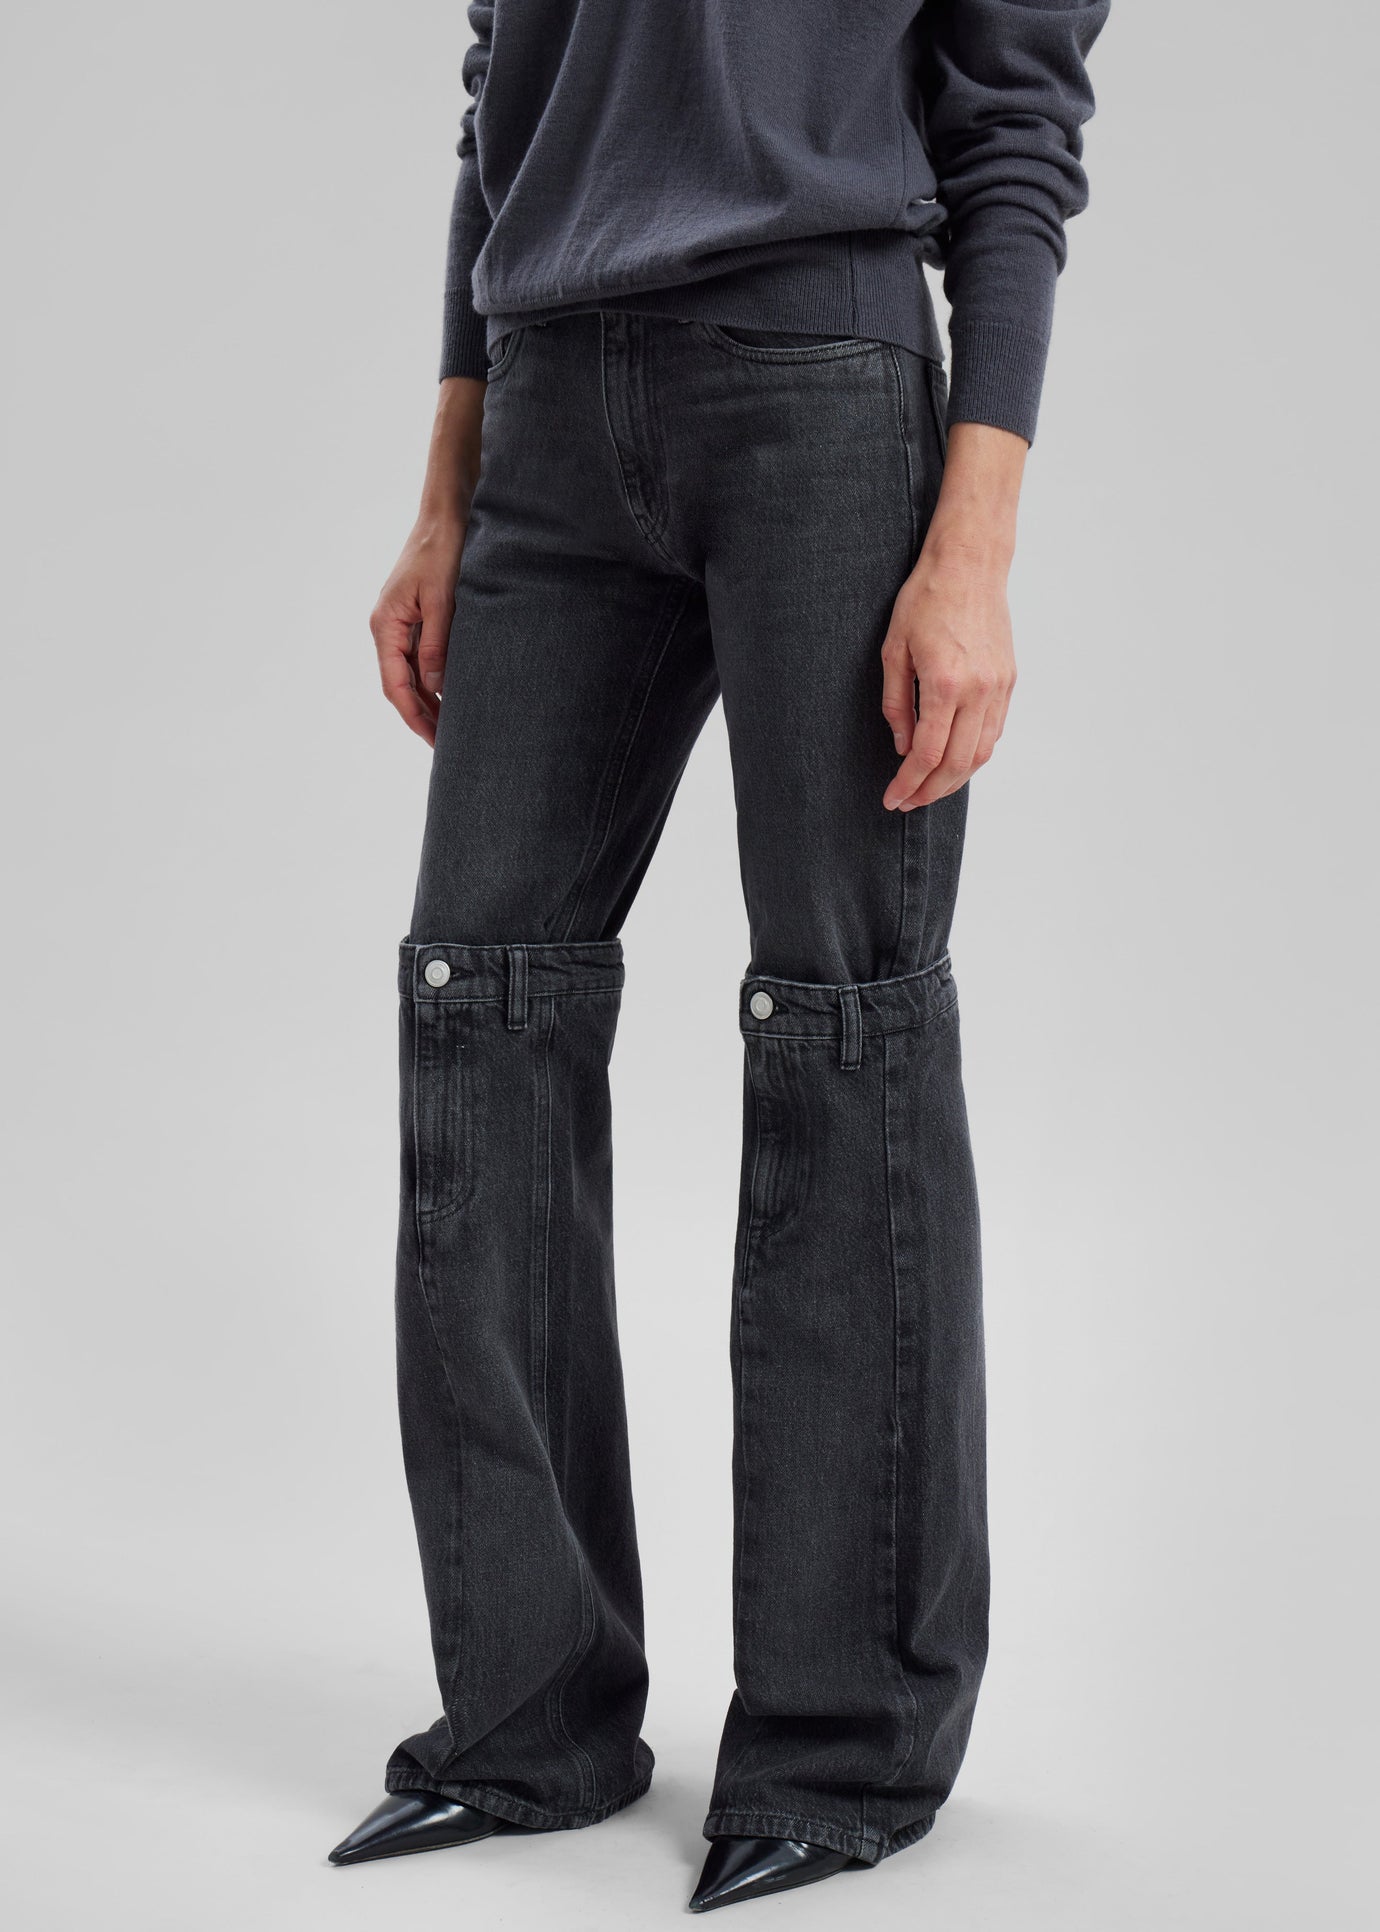 Kane Straight Fit Dark Wash Jeans – The Denim Lab Shop